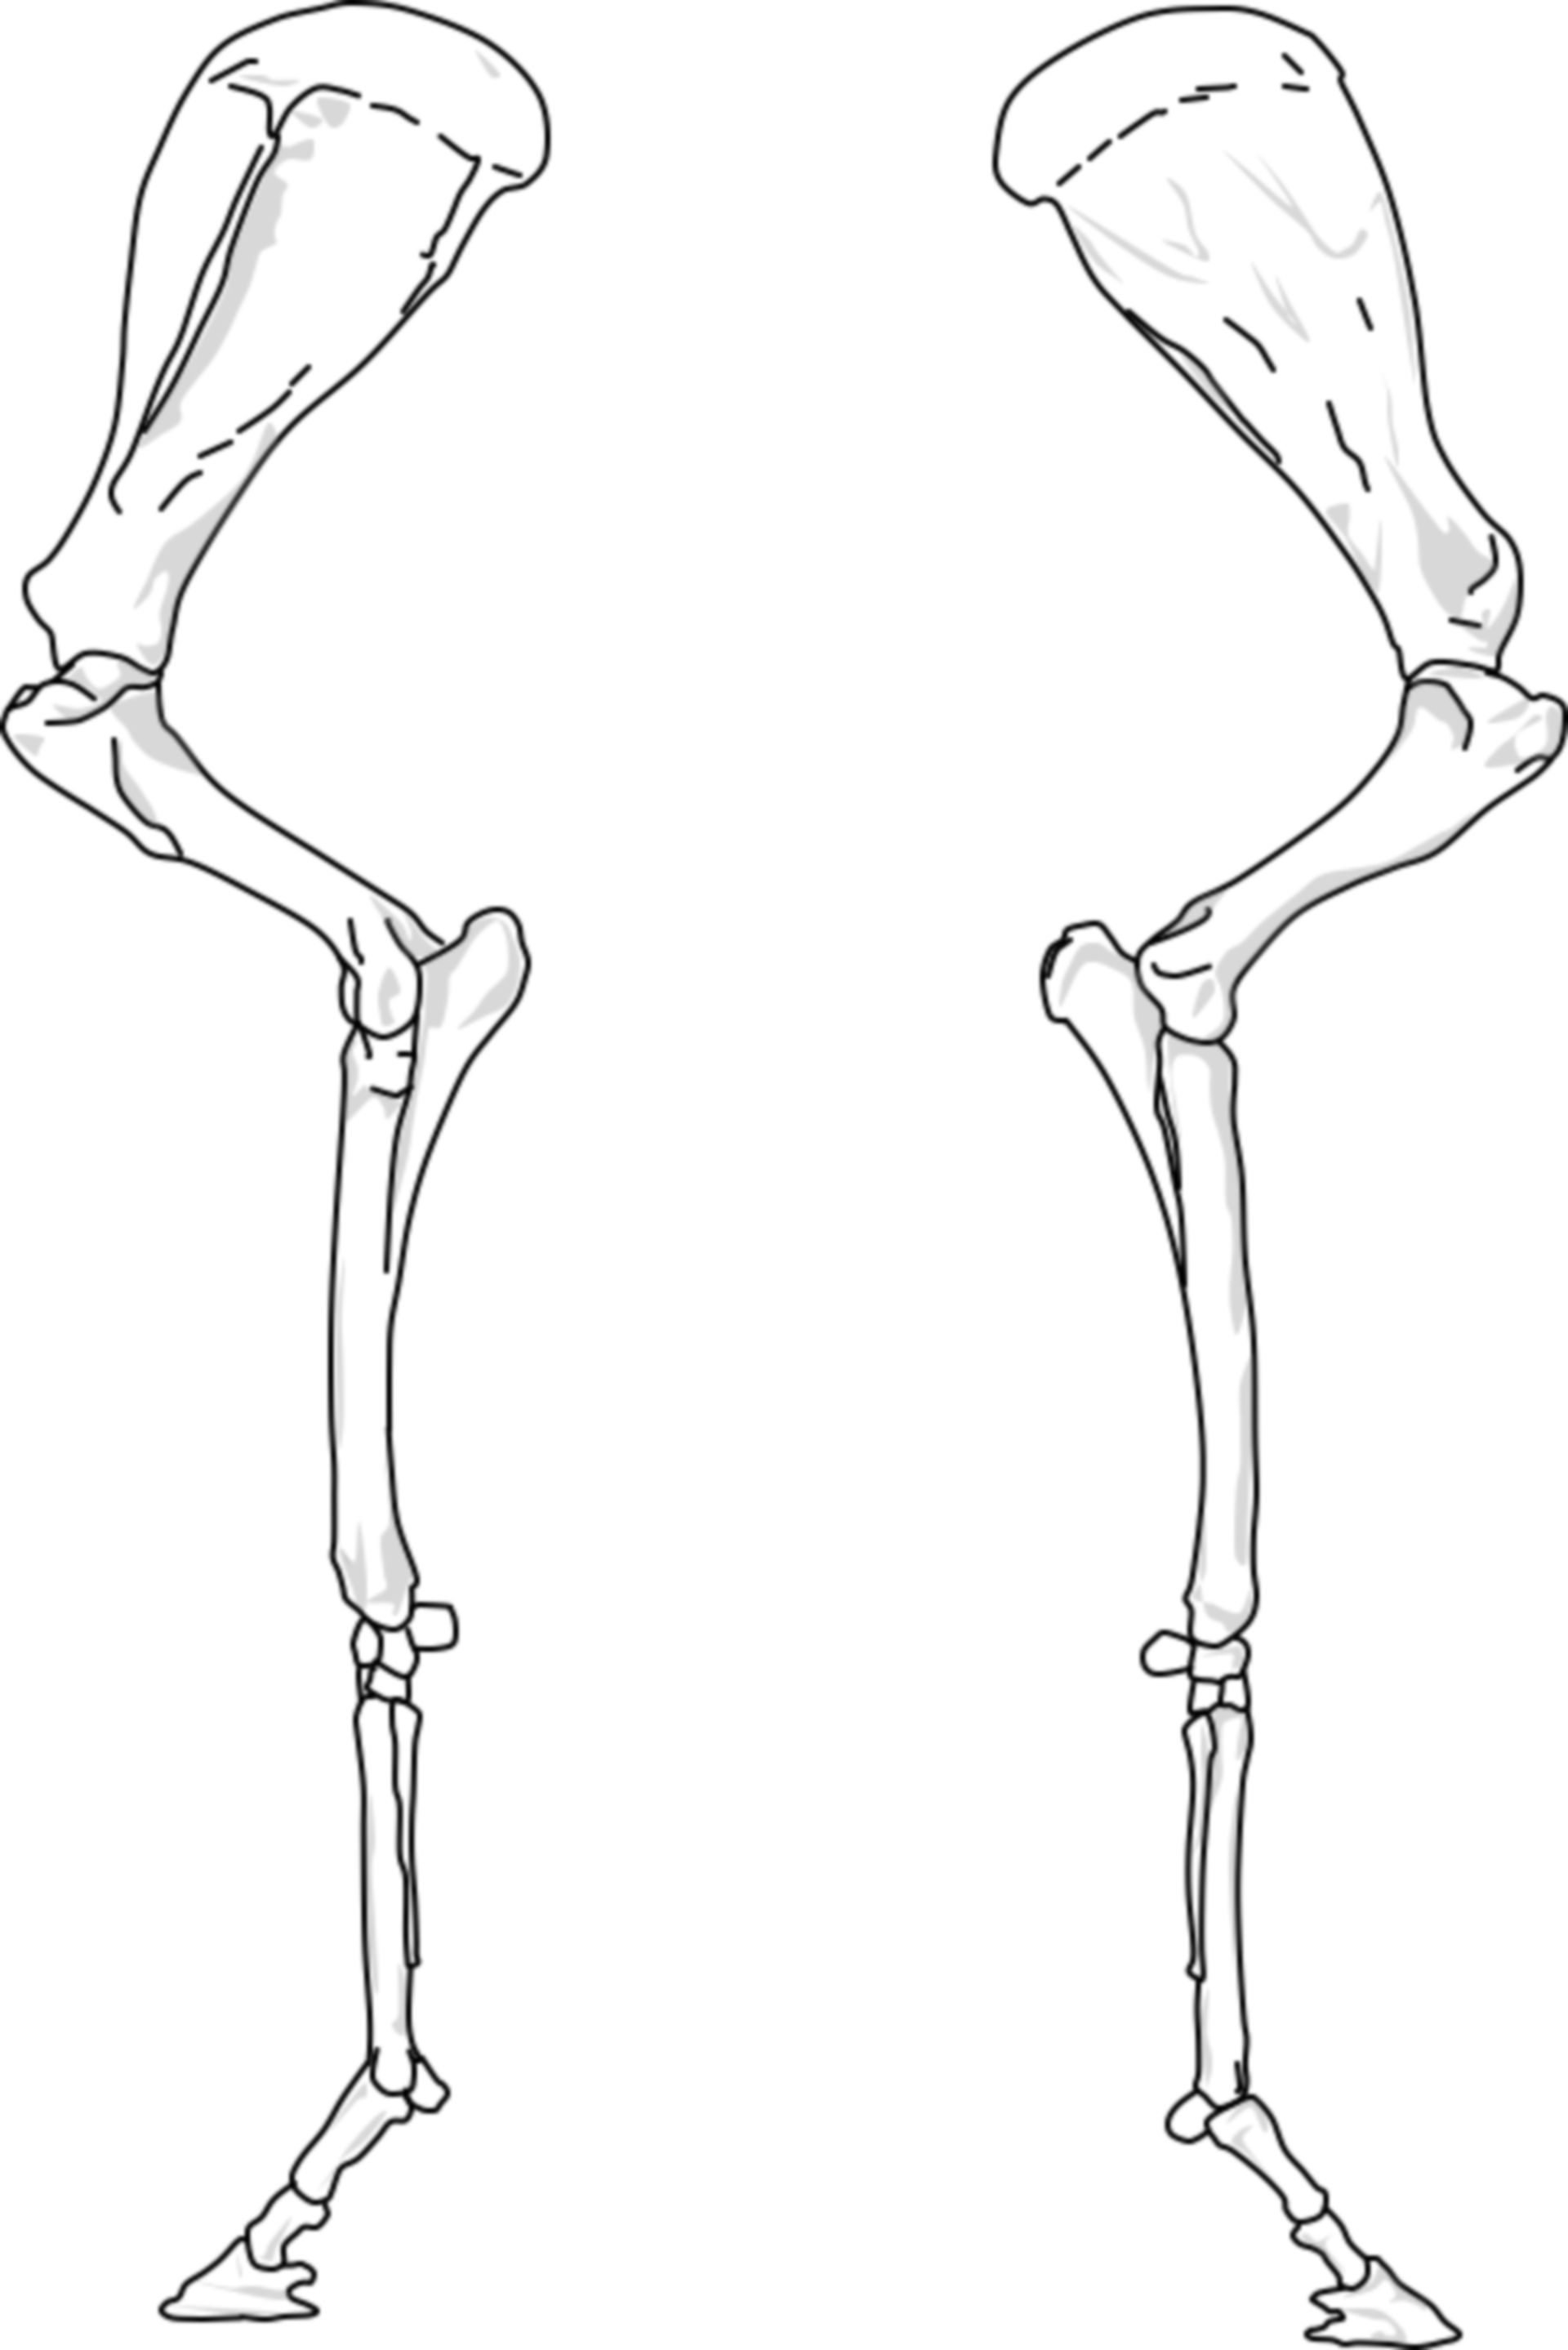 Pferd VE (lateral, medial)